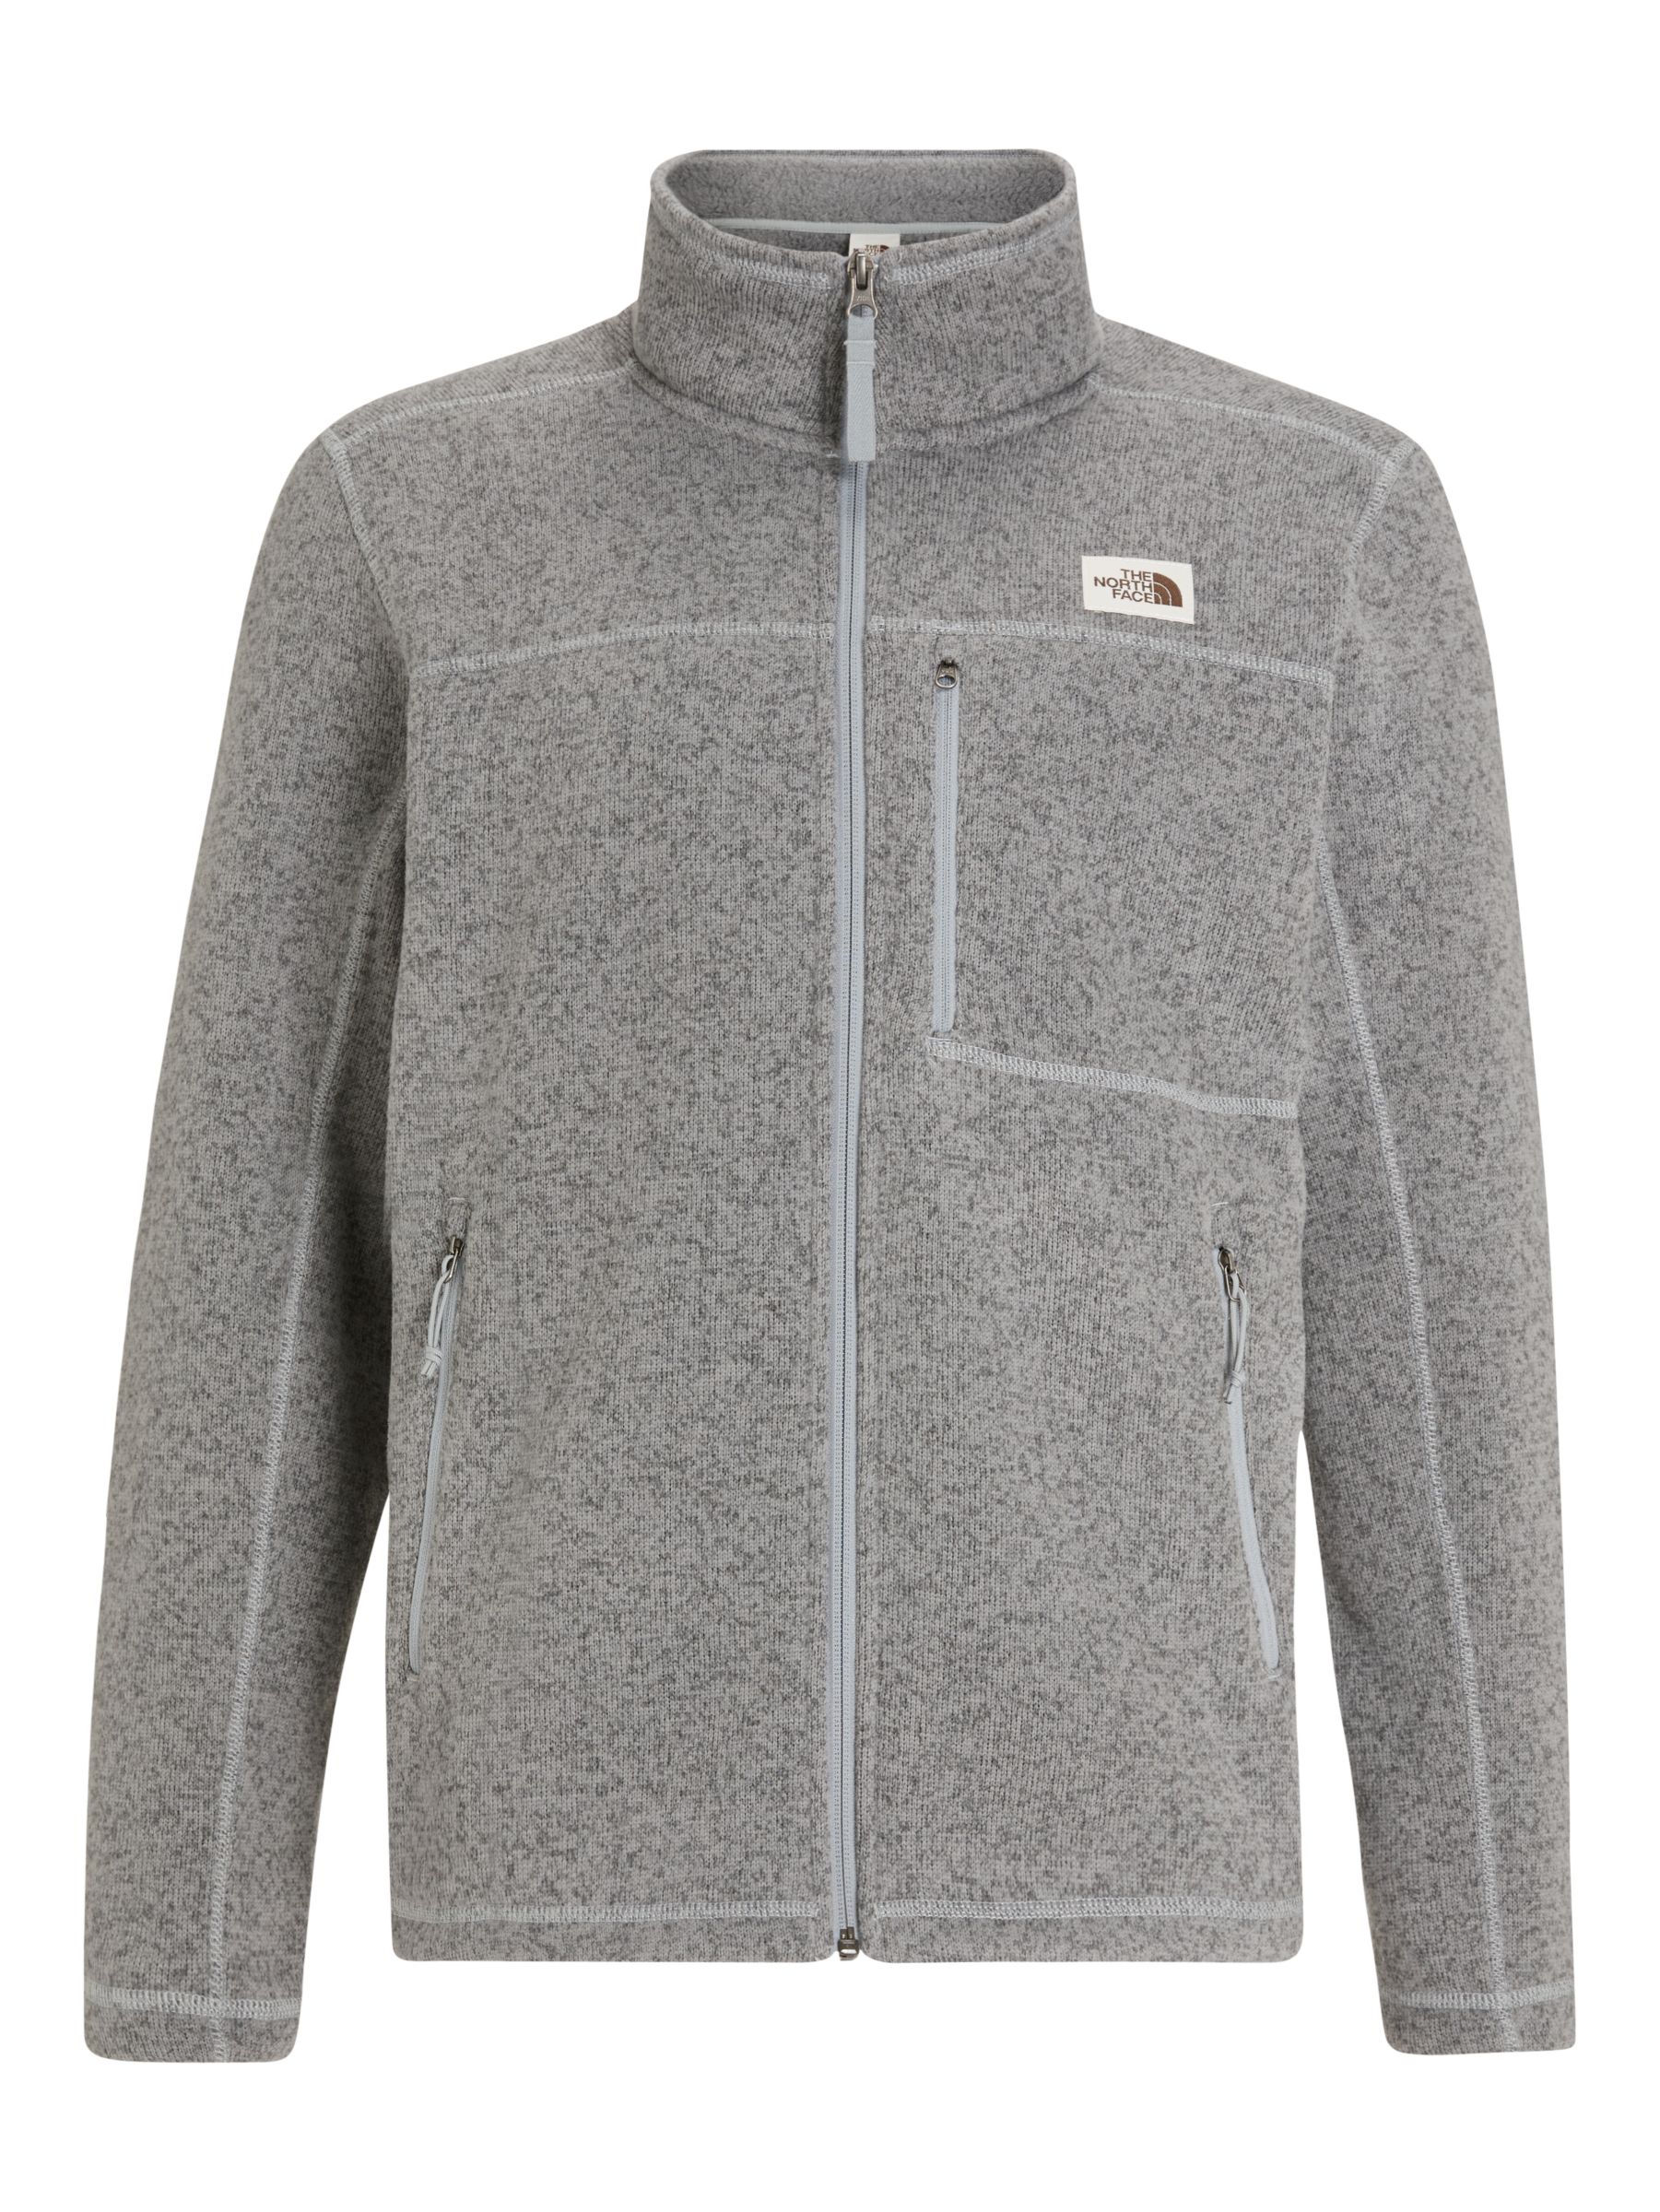 Branded North Face Sweater Jacket Medium Grey Heather